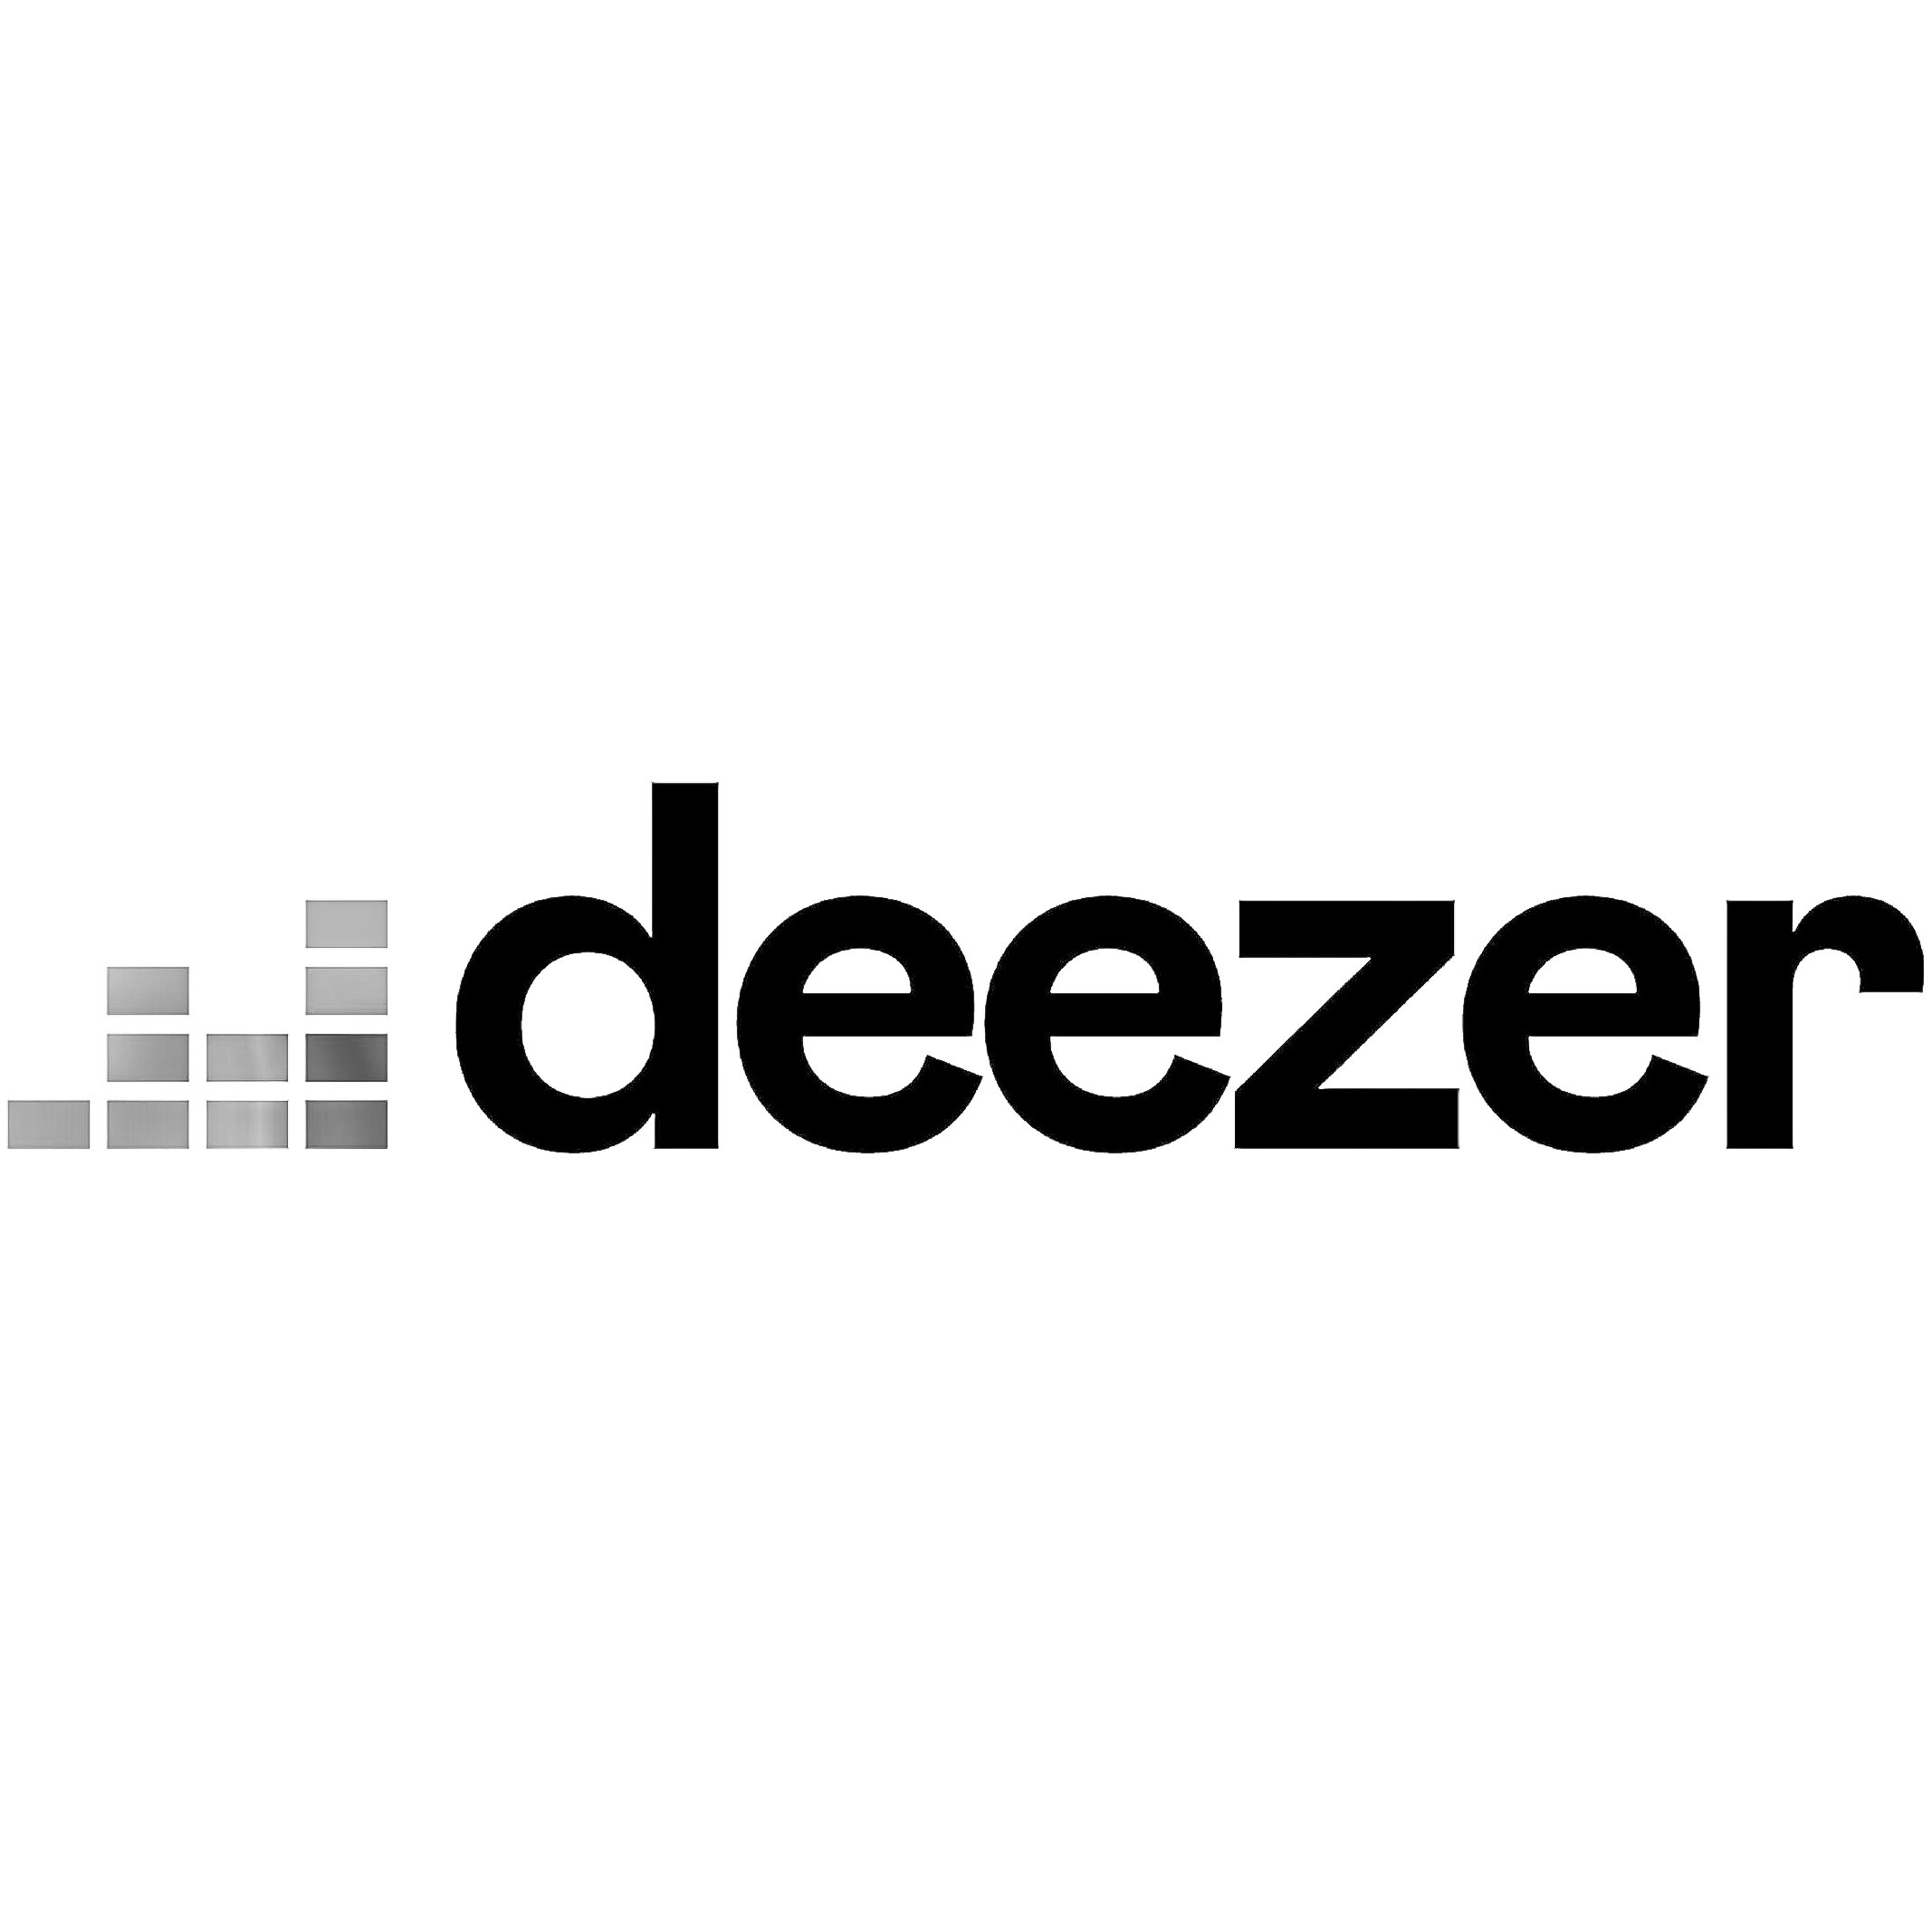 Deezer-Logo-scaled.JPG